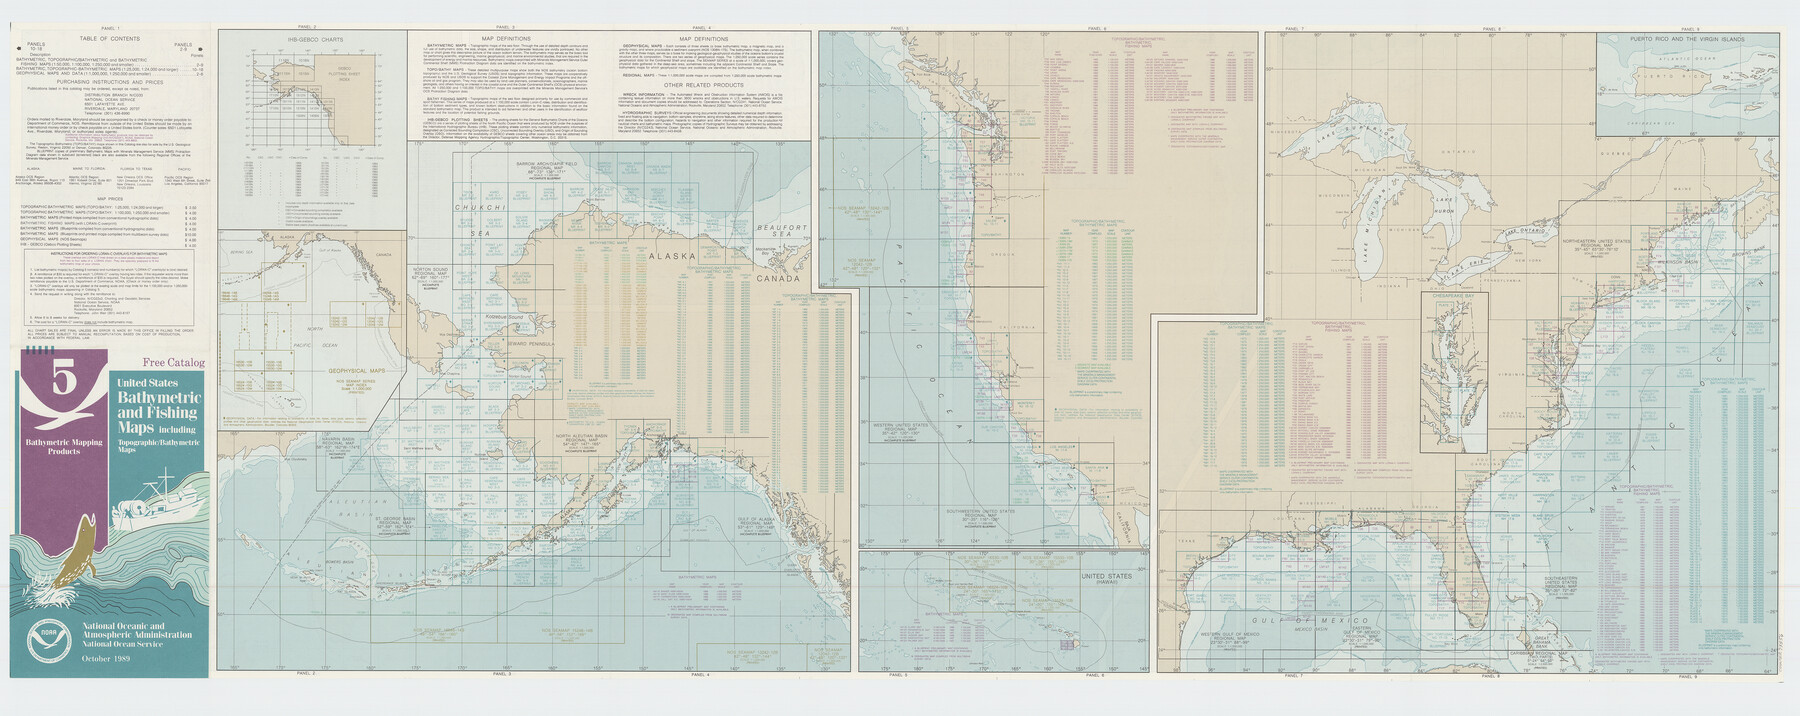 United States Bathymetric and Fishing Maps including  Topographic/Bathymetric Maps, 73556, United States Bathymetric and Fishing  Maps including Topographic/Bathymetric Maps, General Map Collection